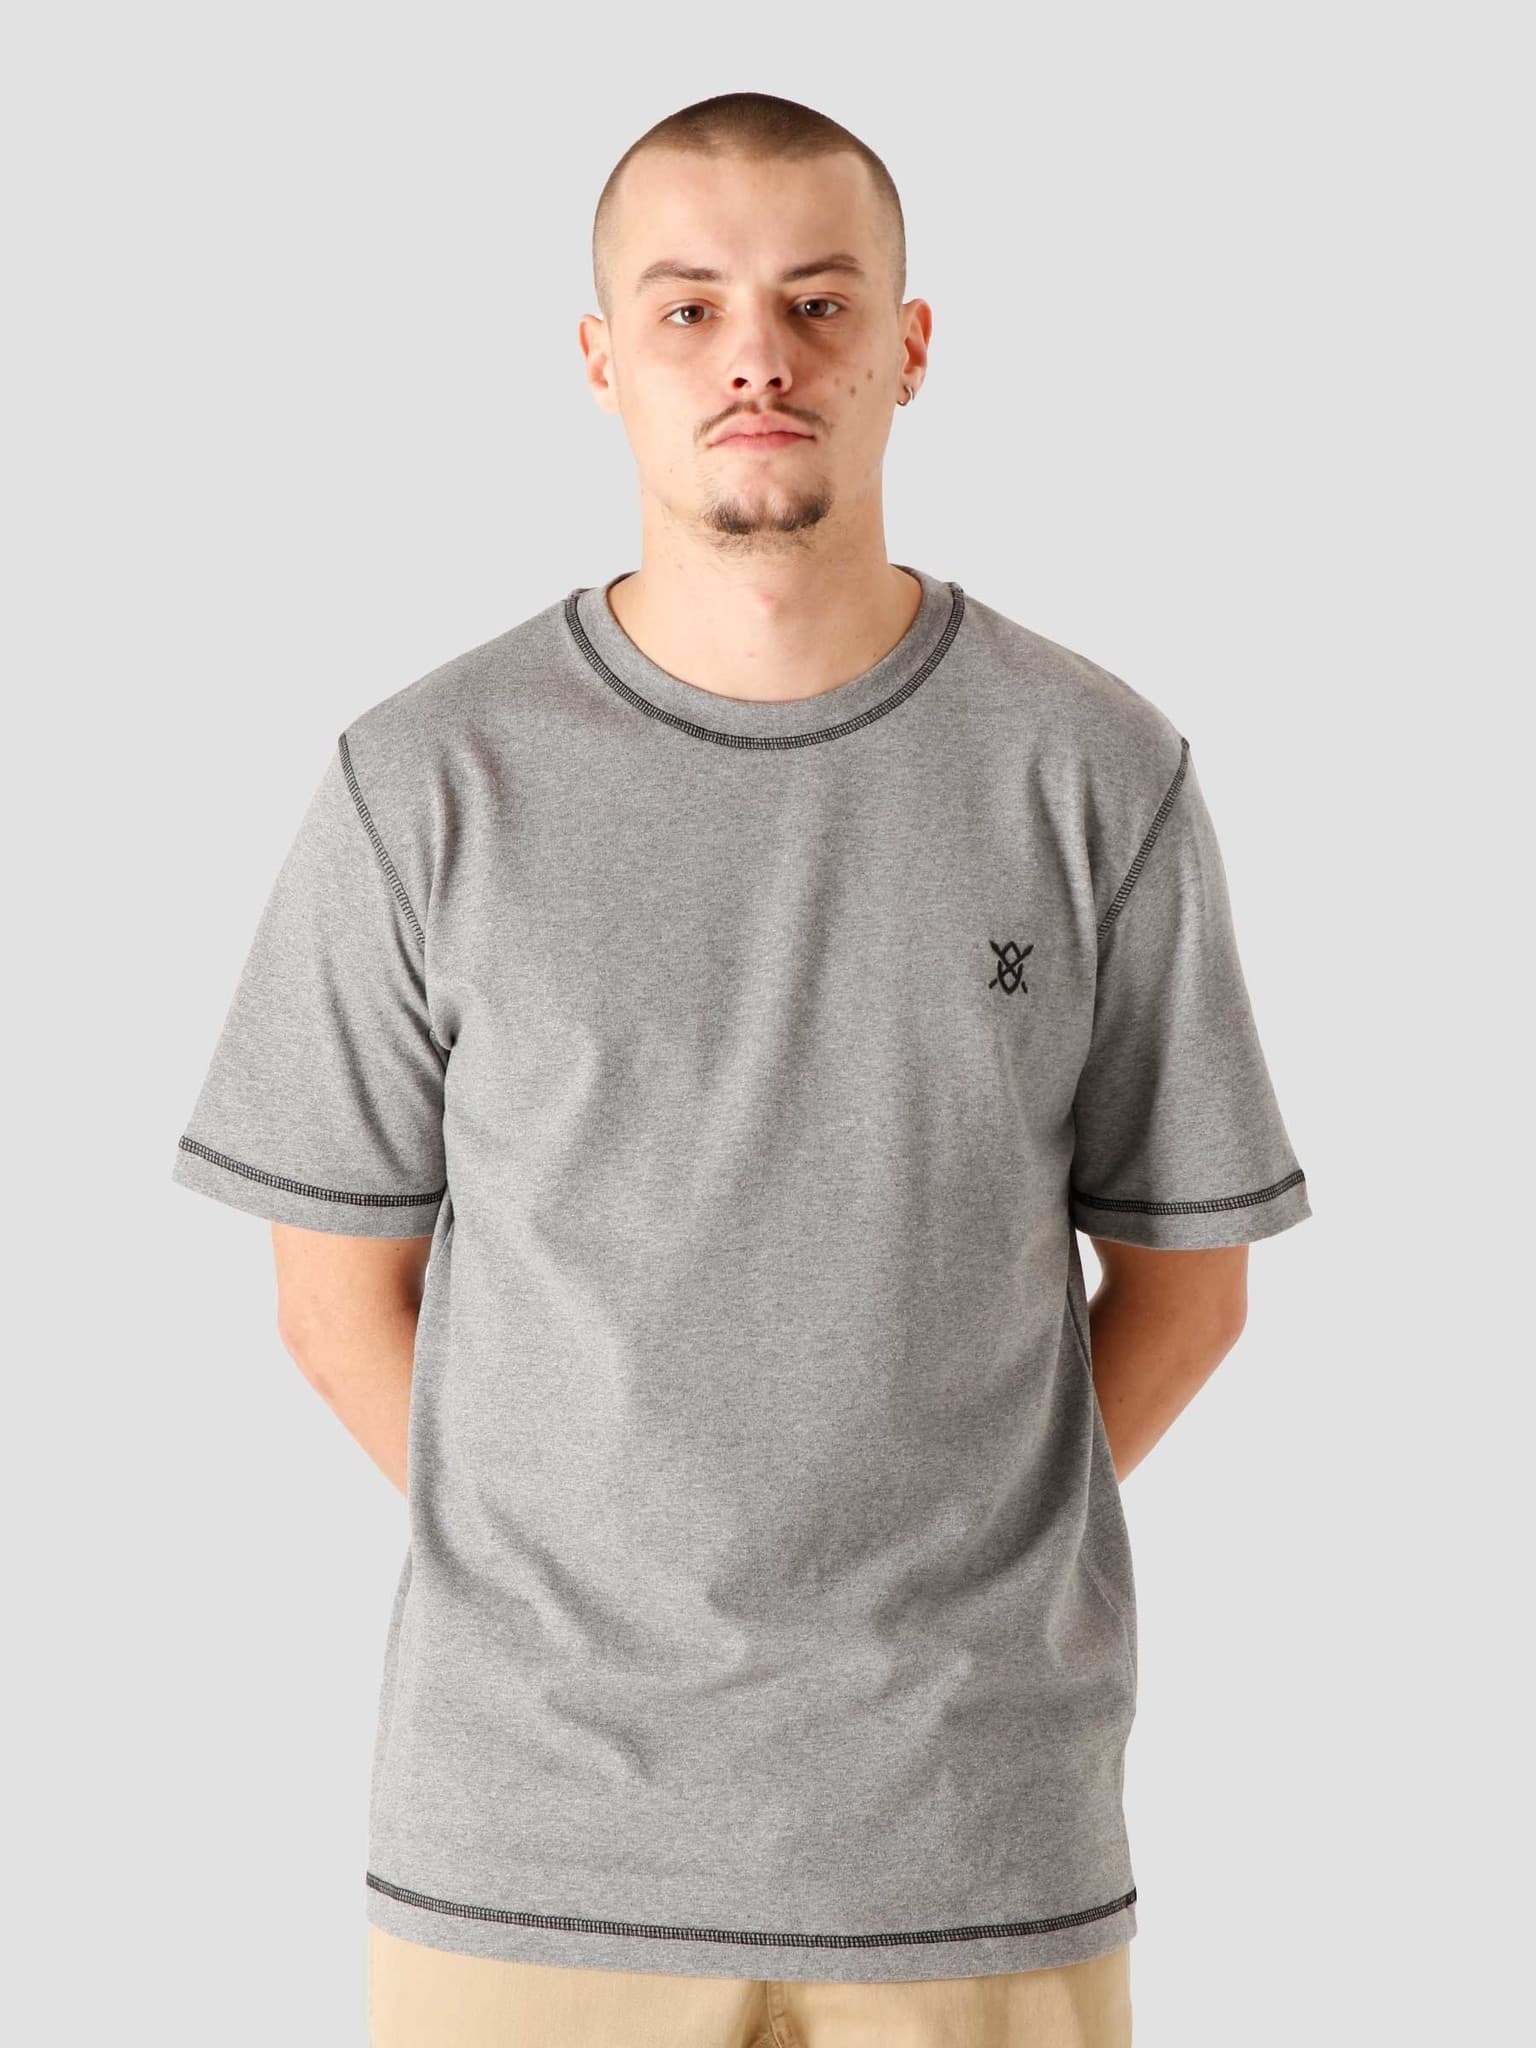 Hoshield T-Shirt Grey 2021310